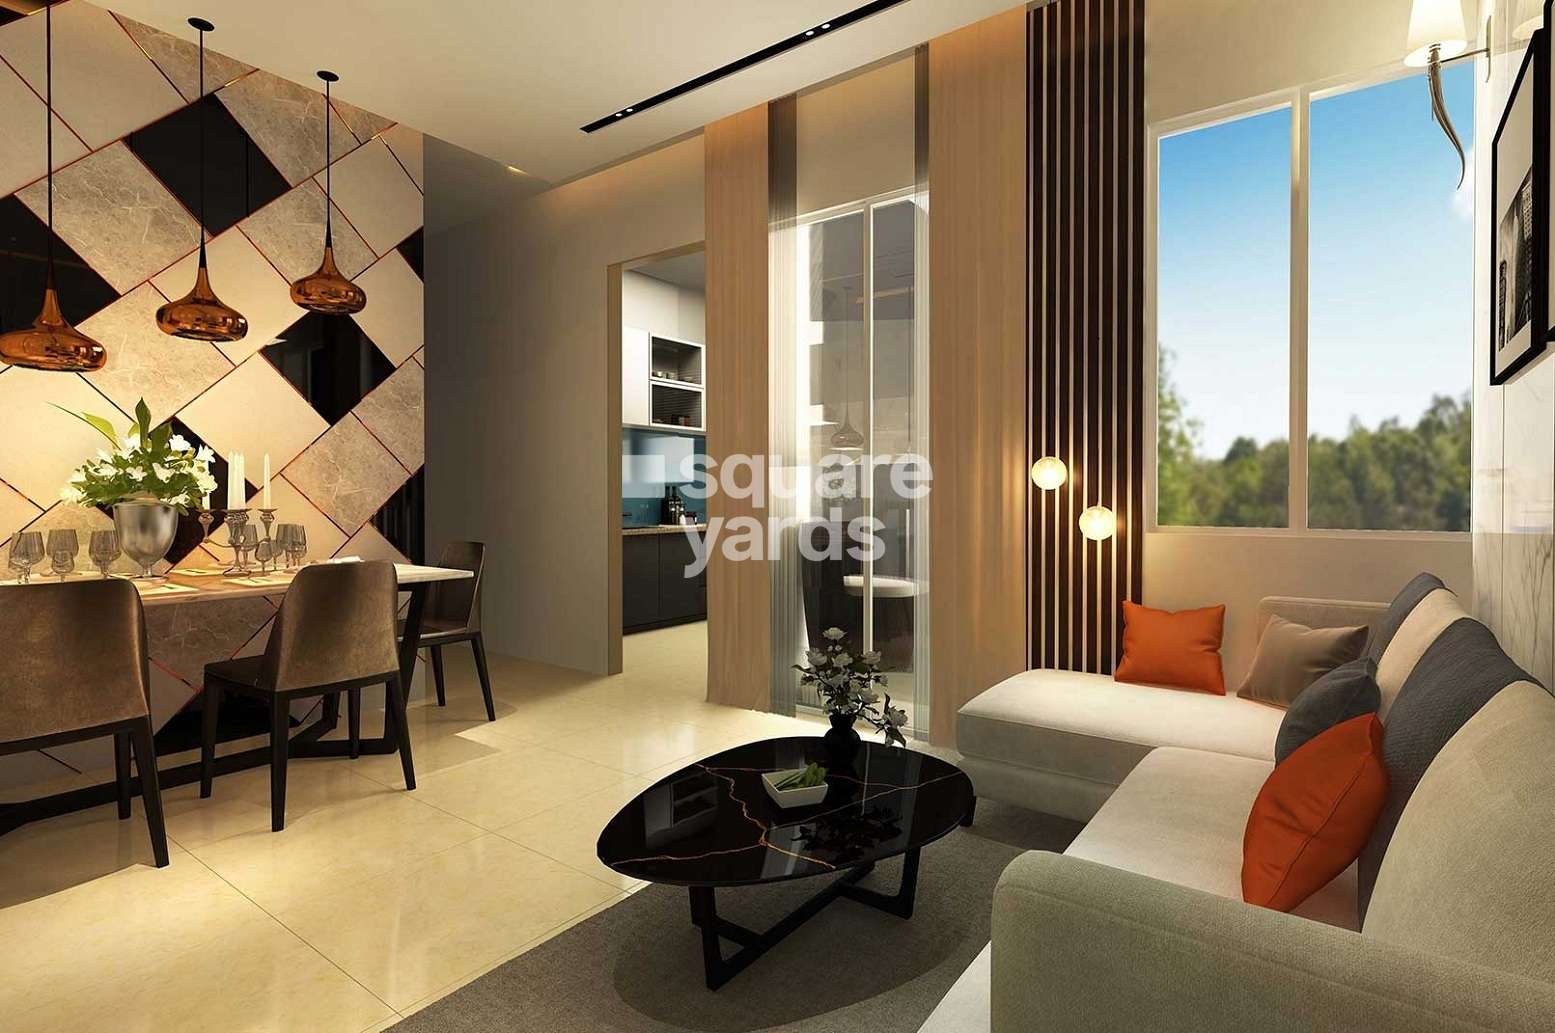 belmac riverside phase 2 project apartment interiors3